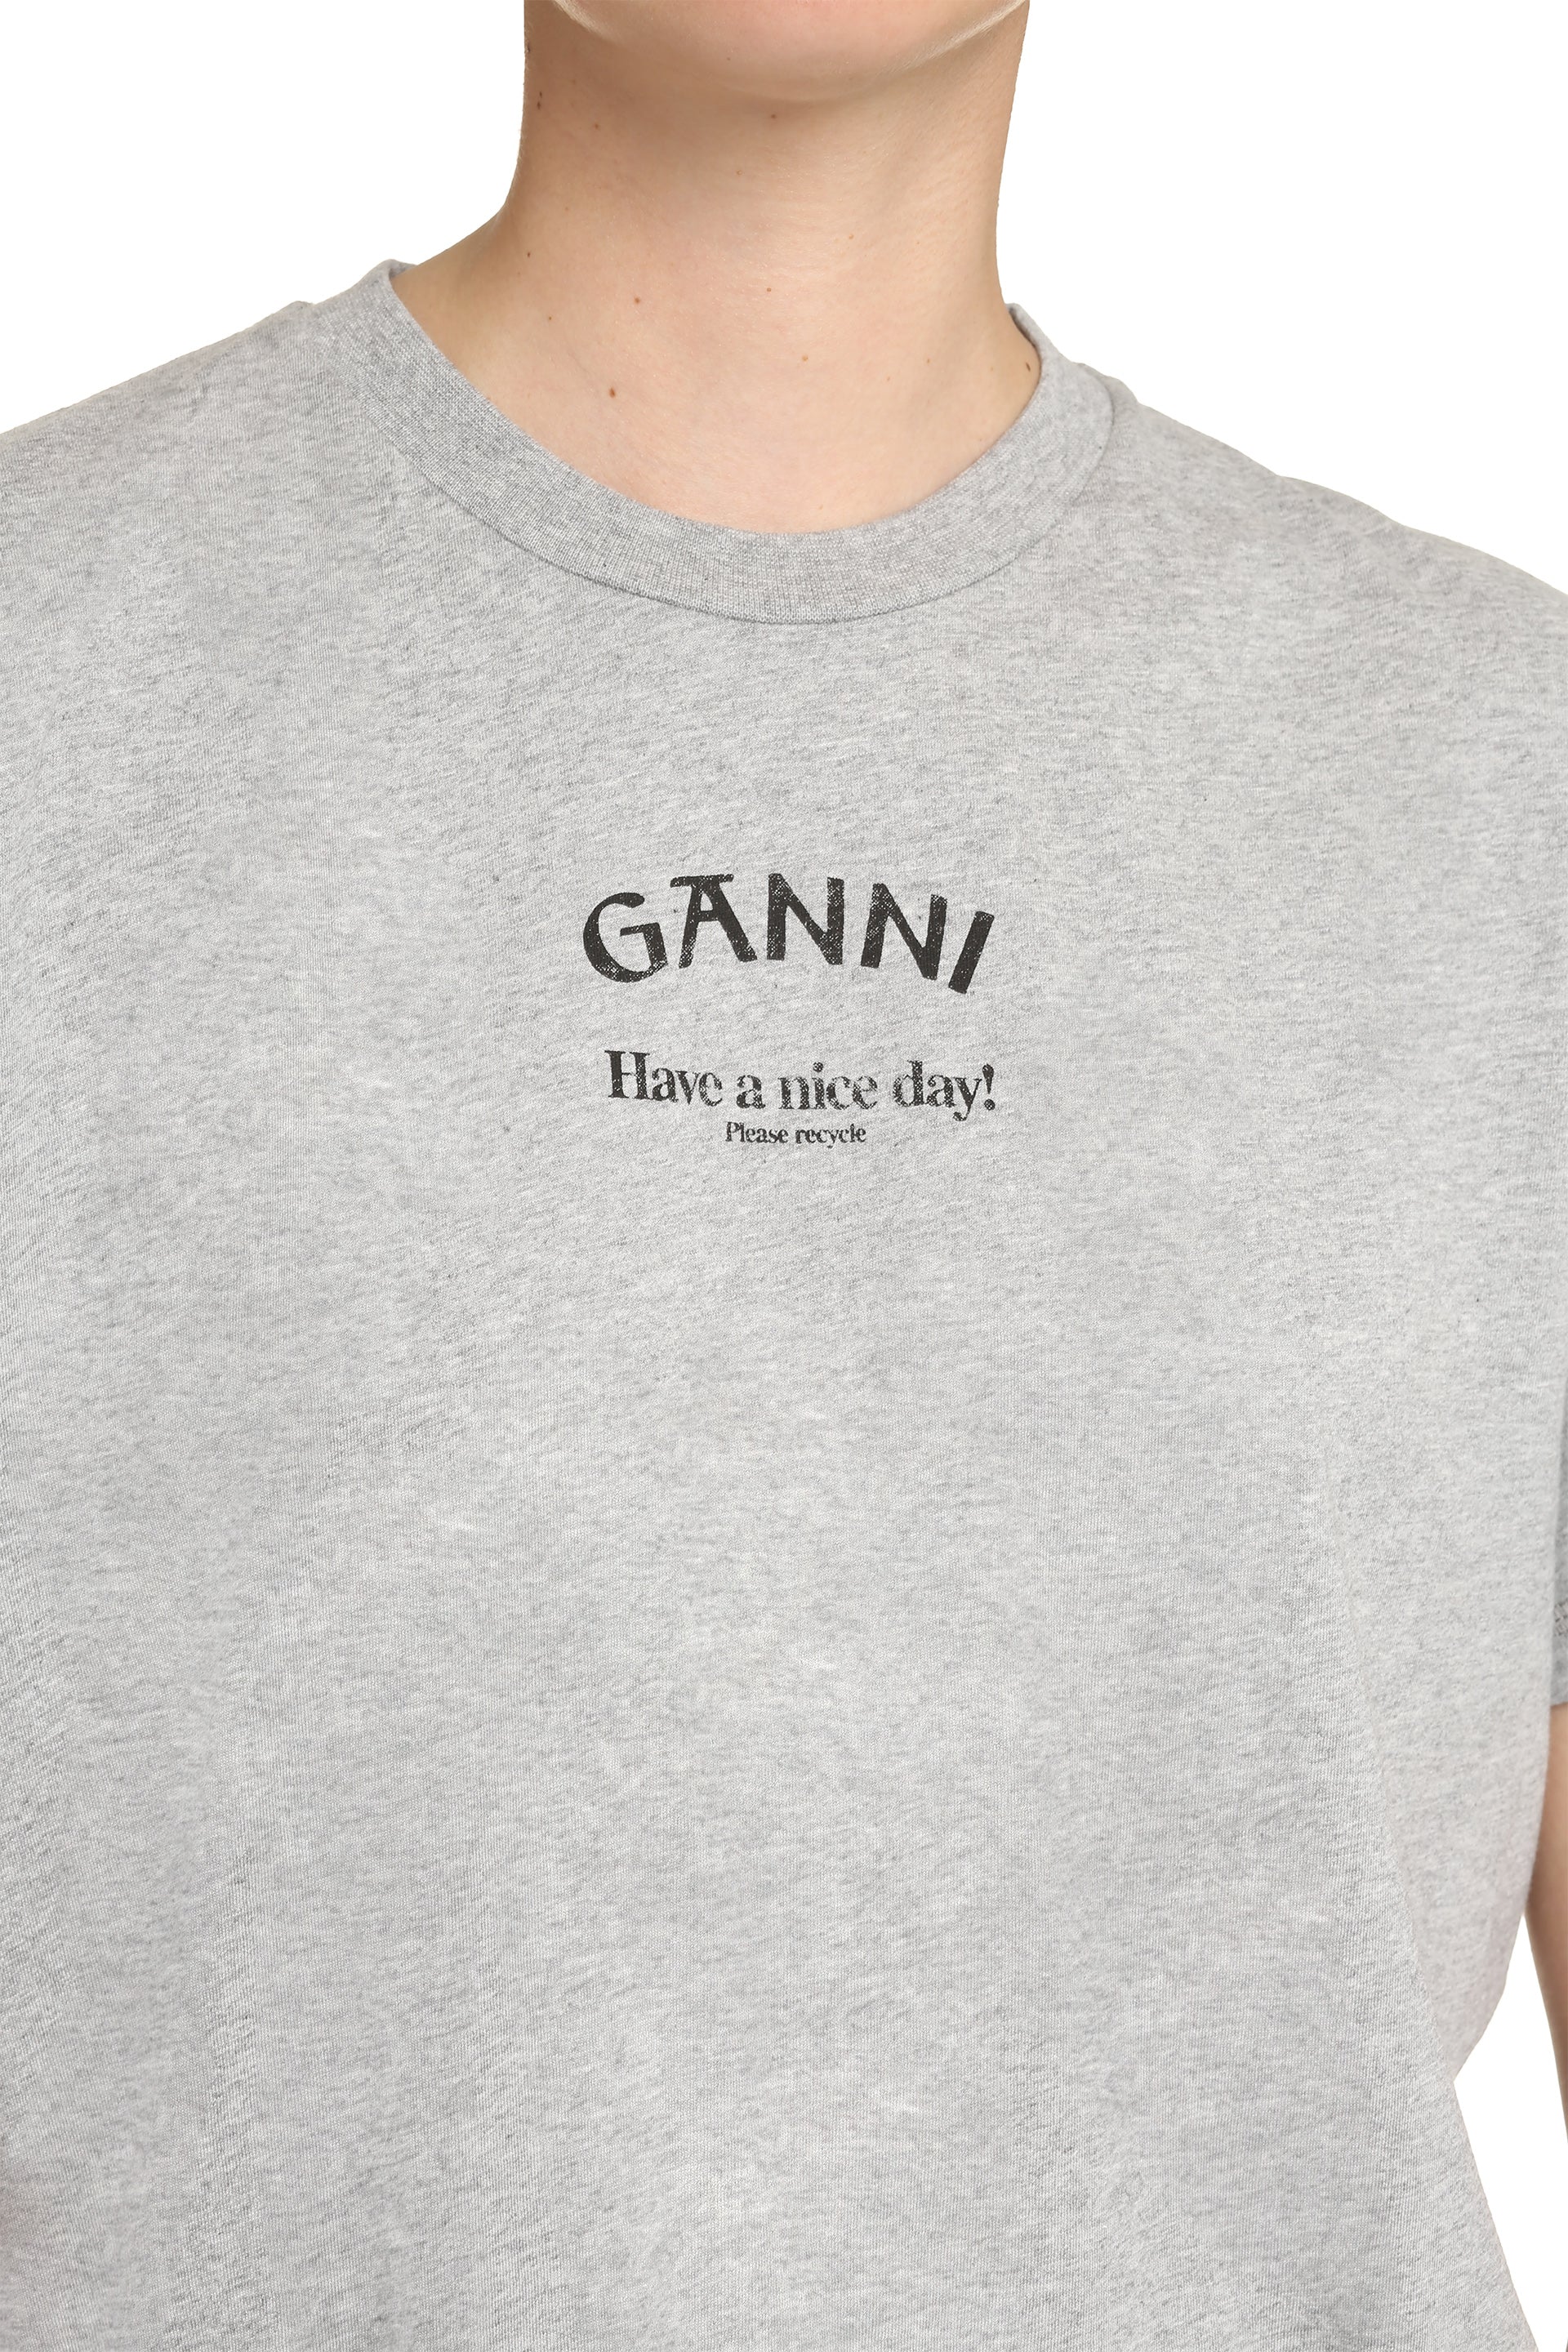 GANNI - Printed cotton T-shirt White - The Corner